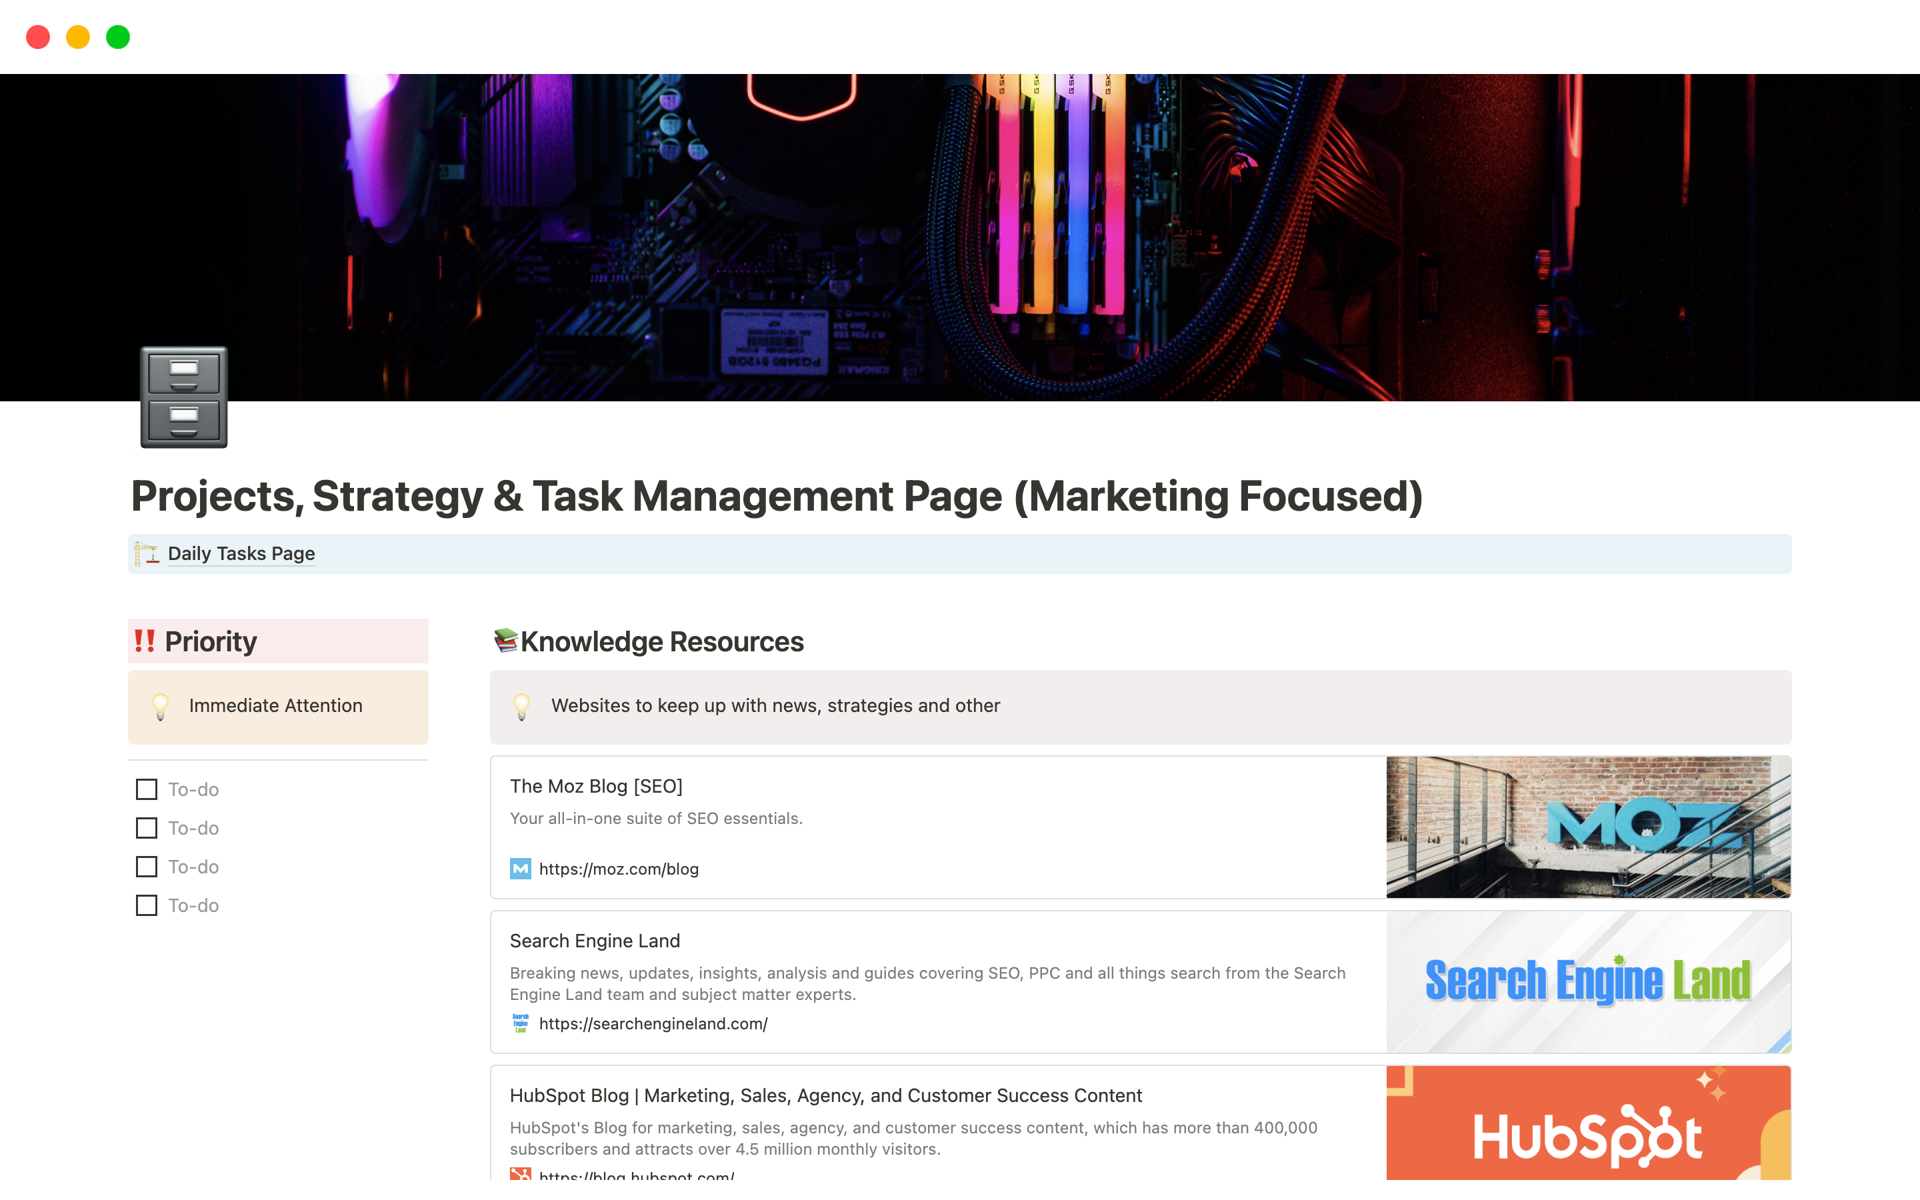 Vista previa de plantilla para Projects, Strategy & Task Management Page